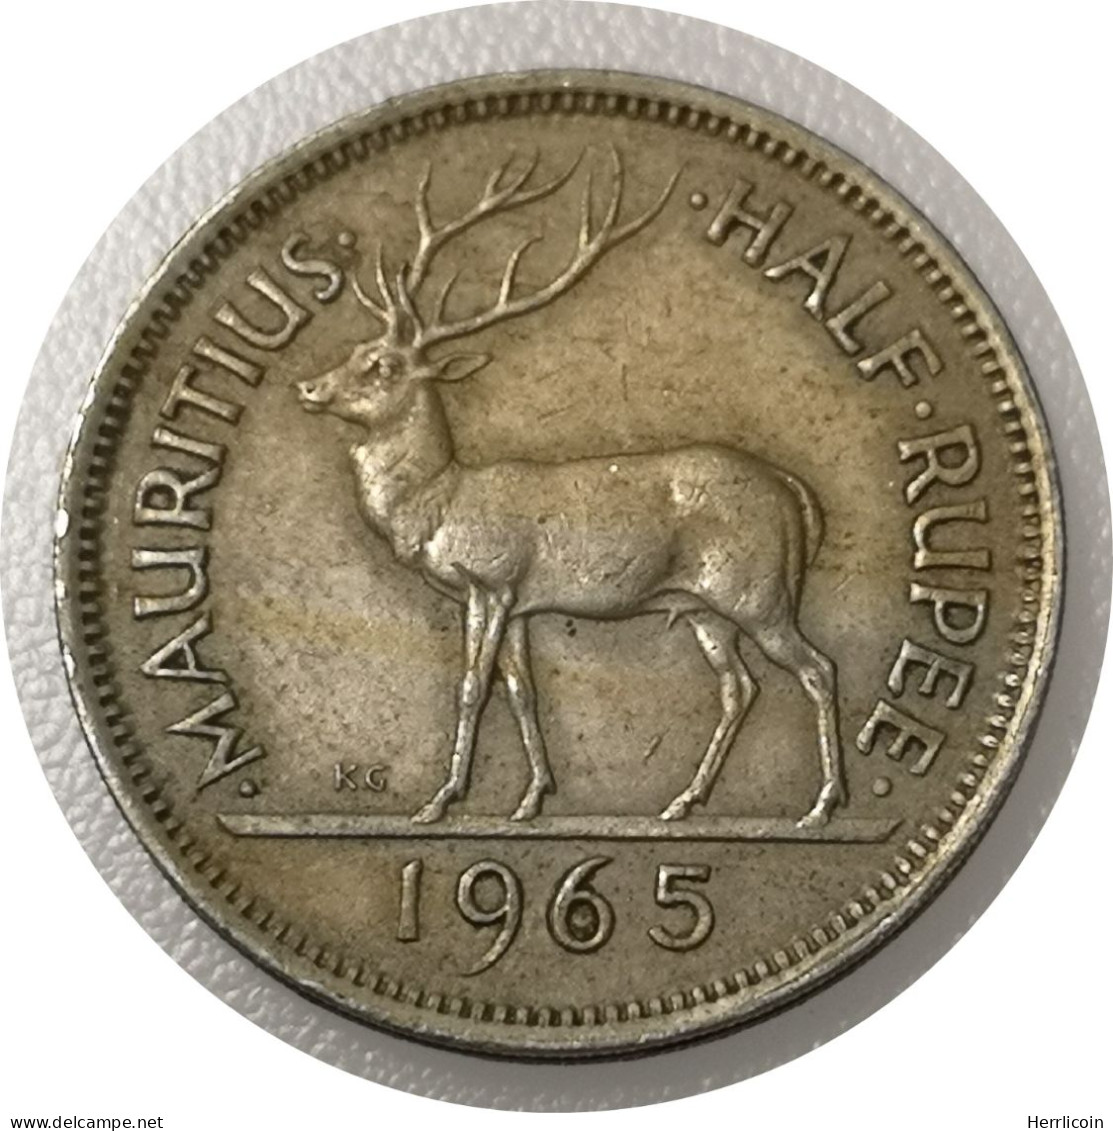 Monnaie Maurice - 1965 - Demi Roupie - Mauricio